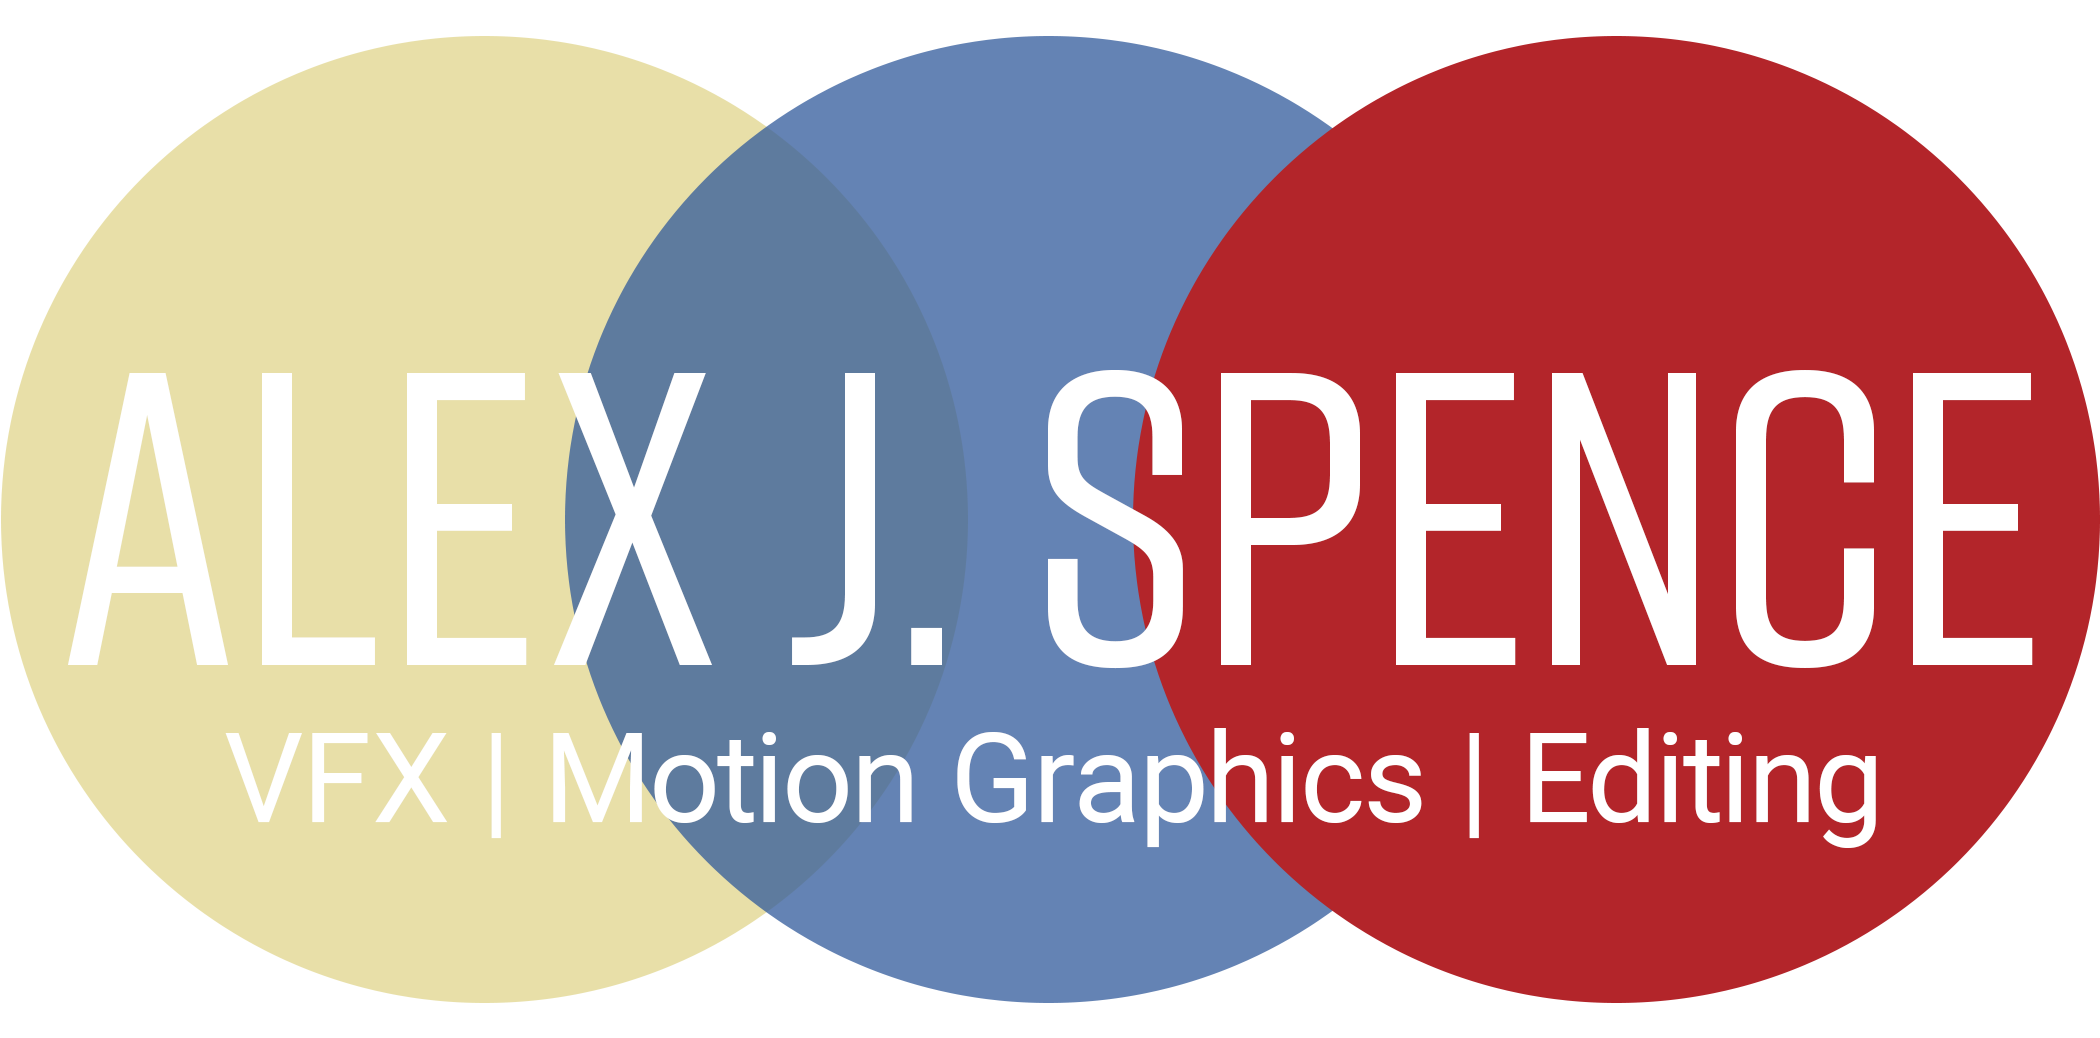 Alex J. Spence - VFX | Motion Graphics | Editing